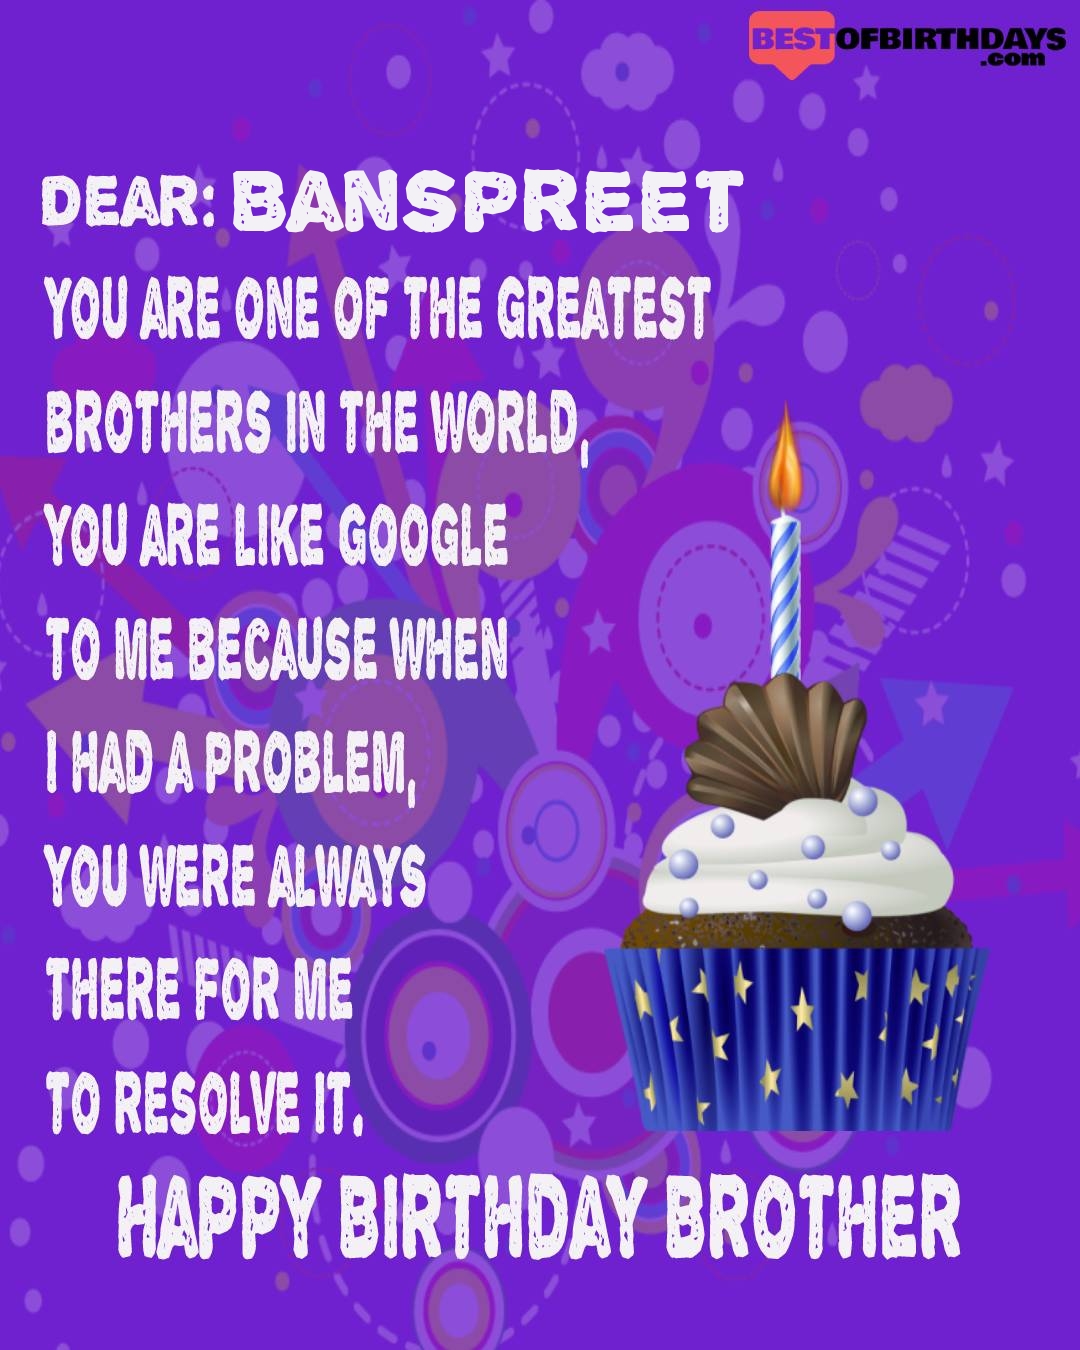 Happy birthday banspreet bhai brother bro